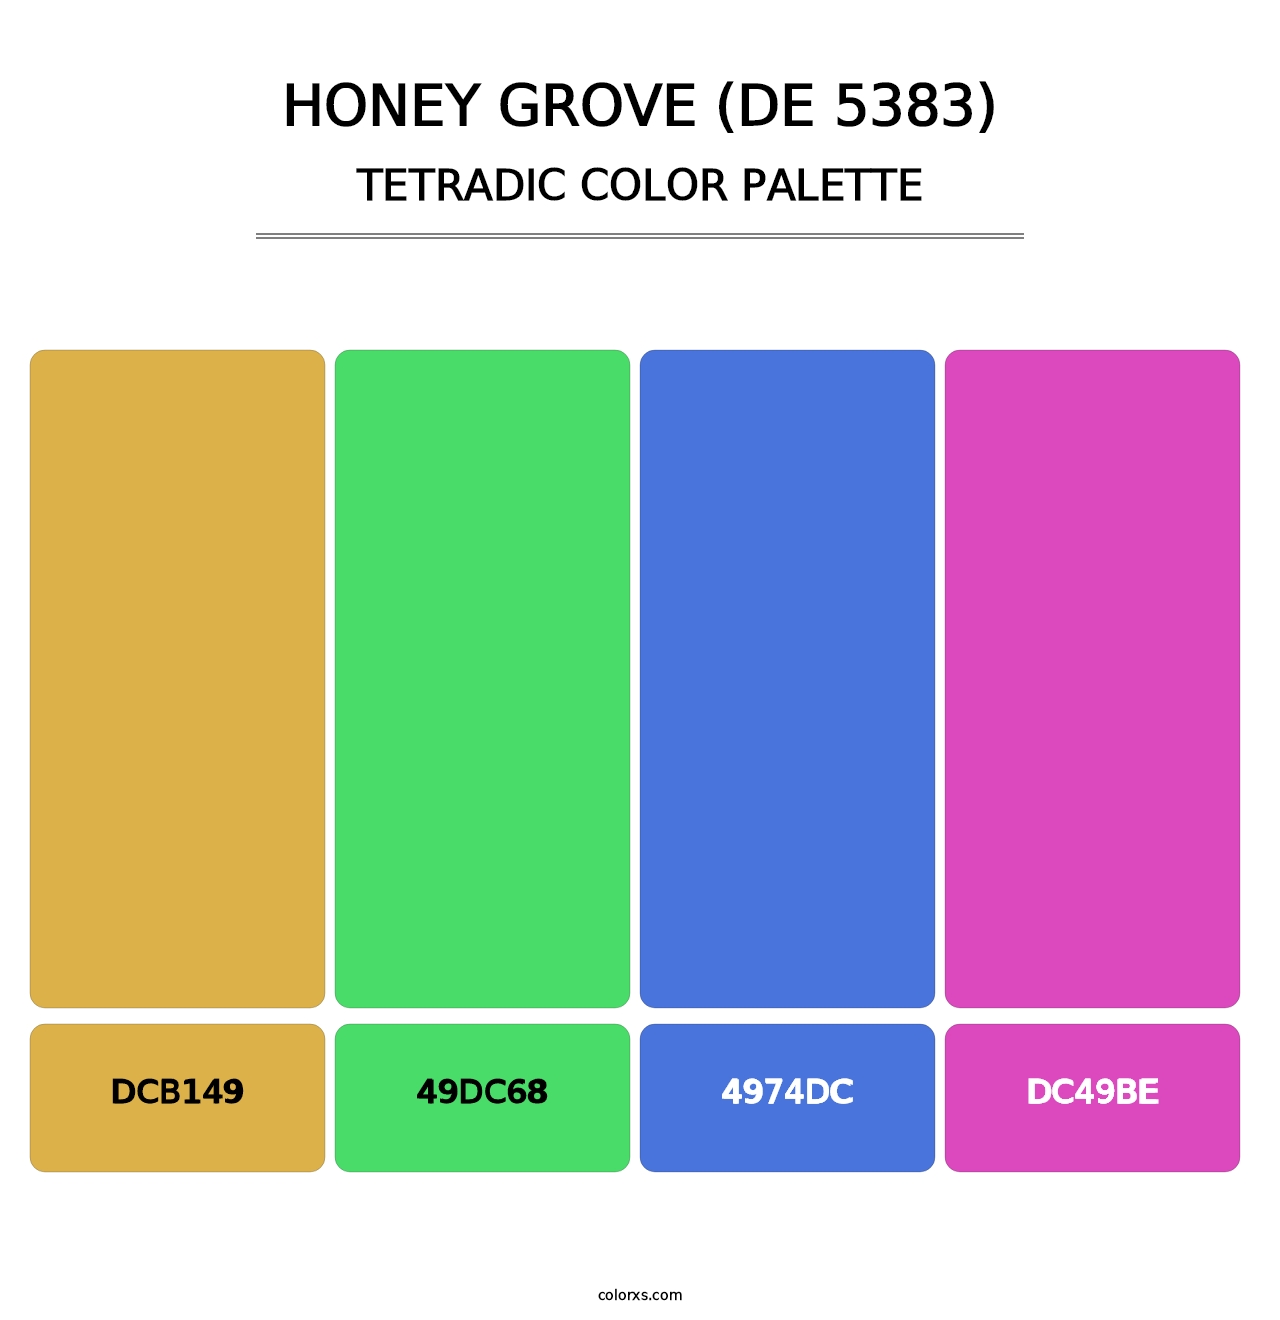 Honey Grove (DE 5383) - Tetradic Color Palette